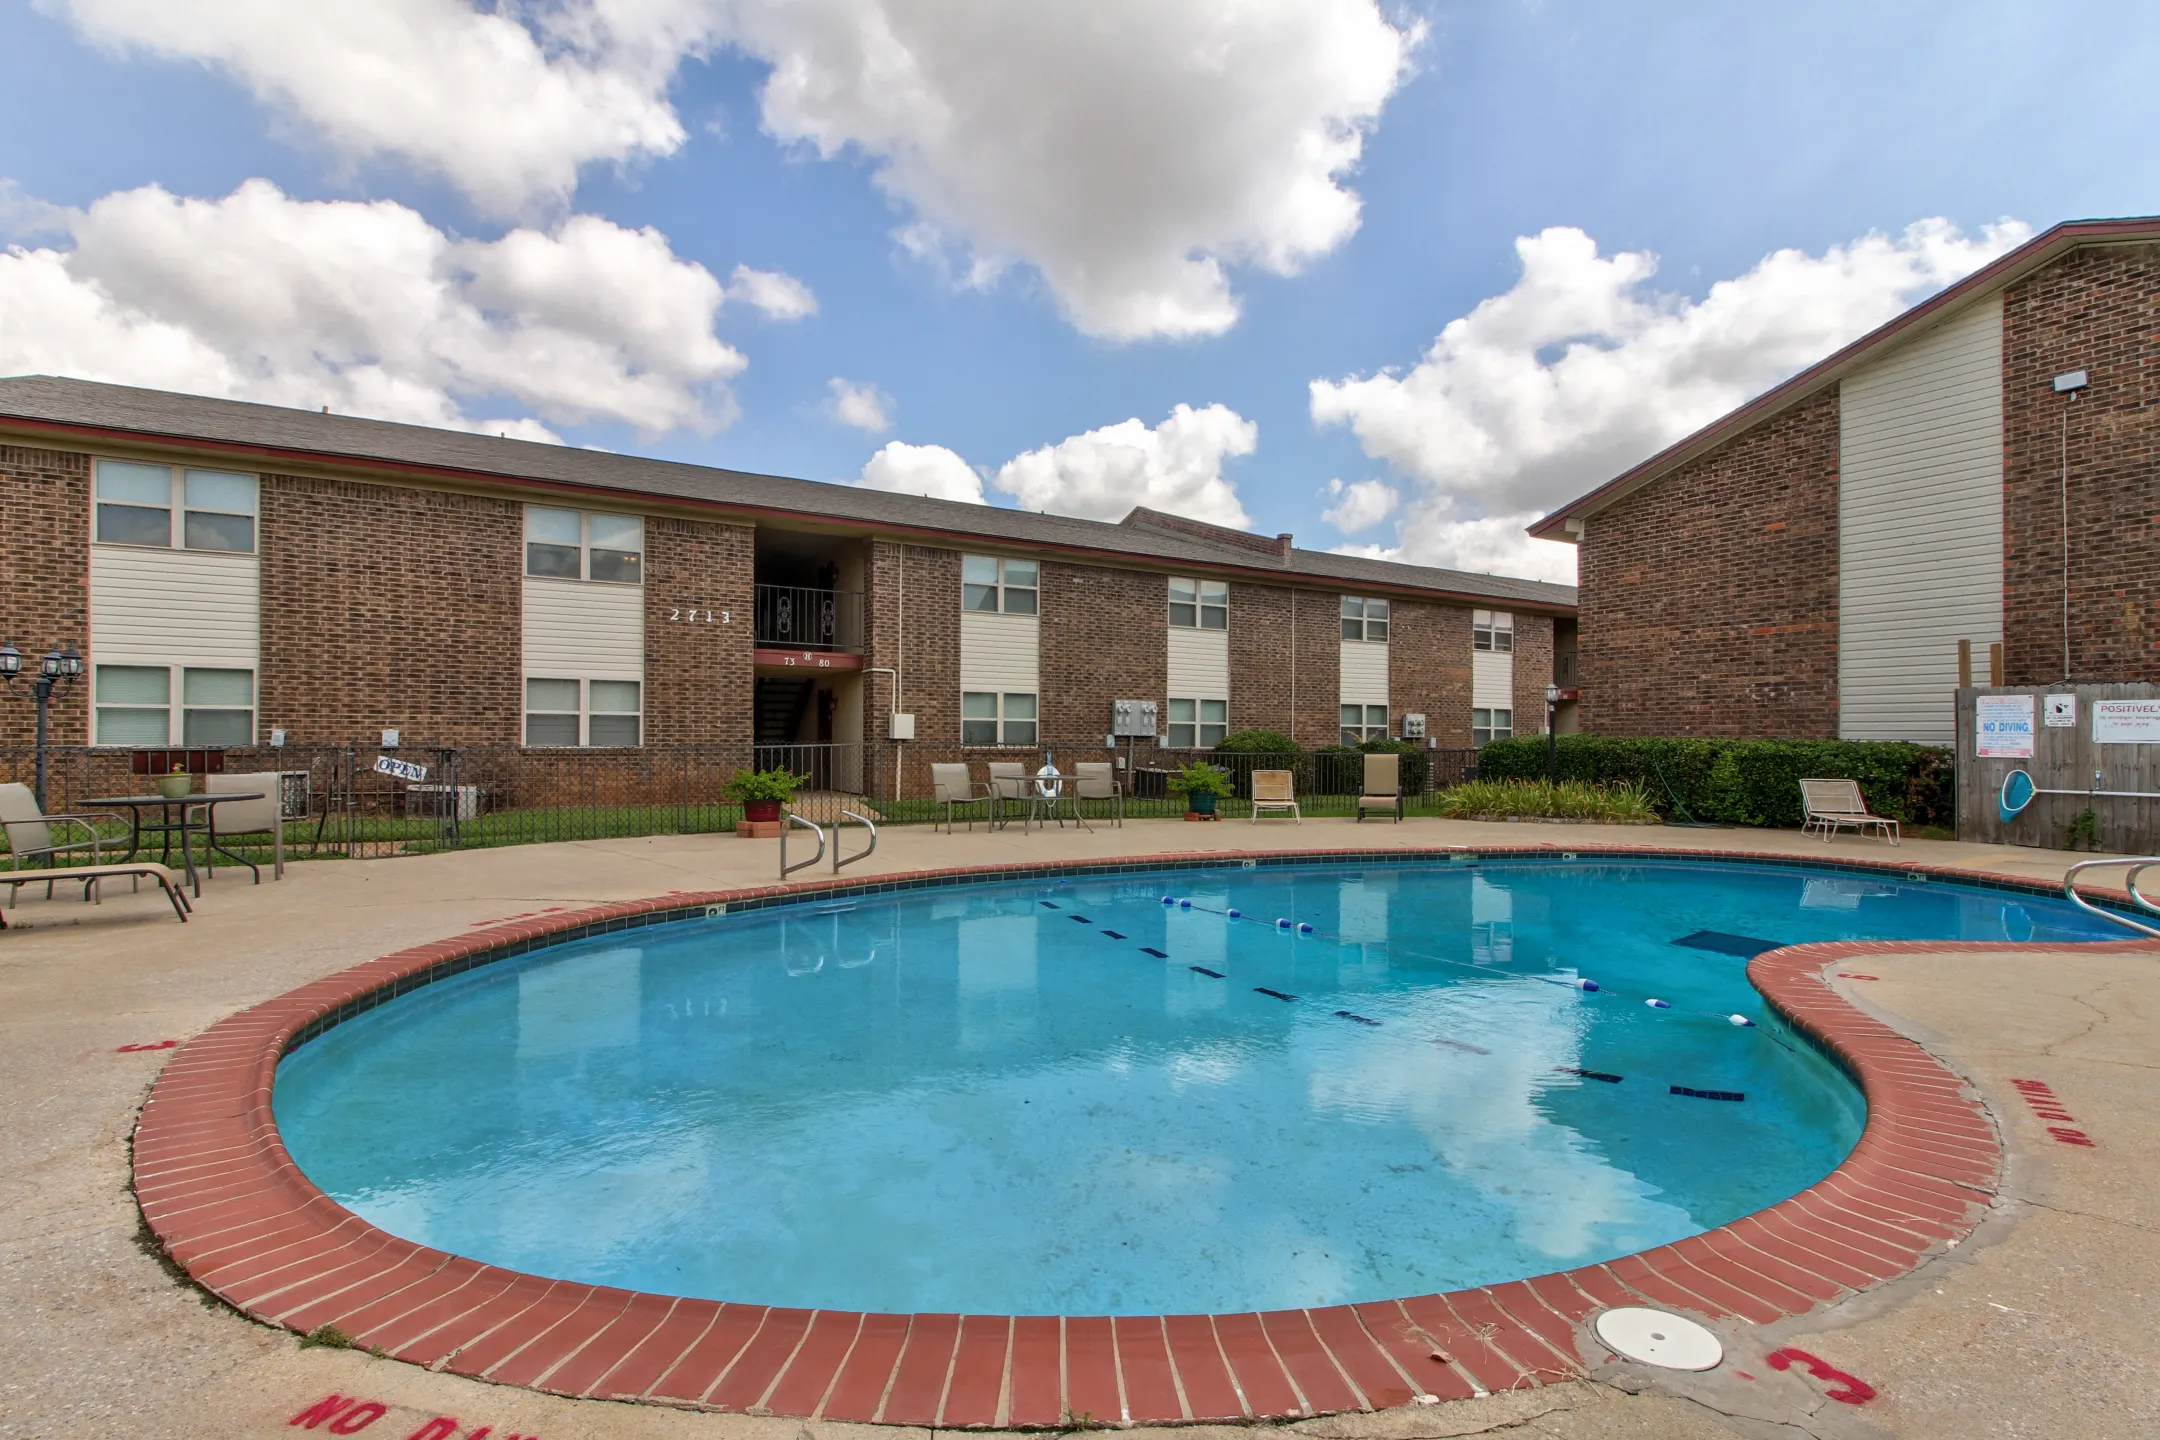 Pool - Casady Apartments - Oklahoma City, OK